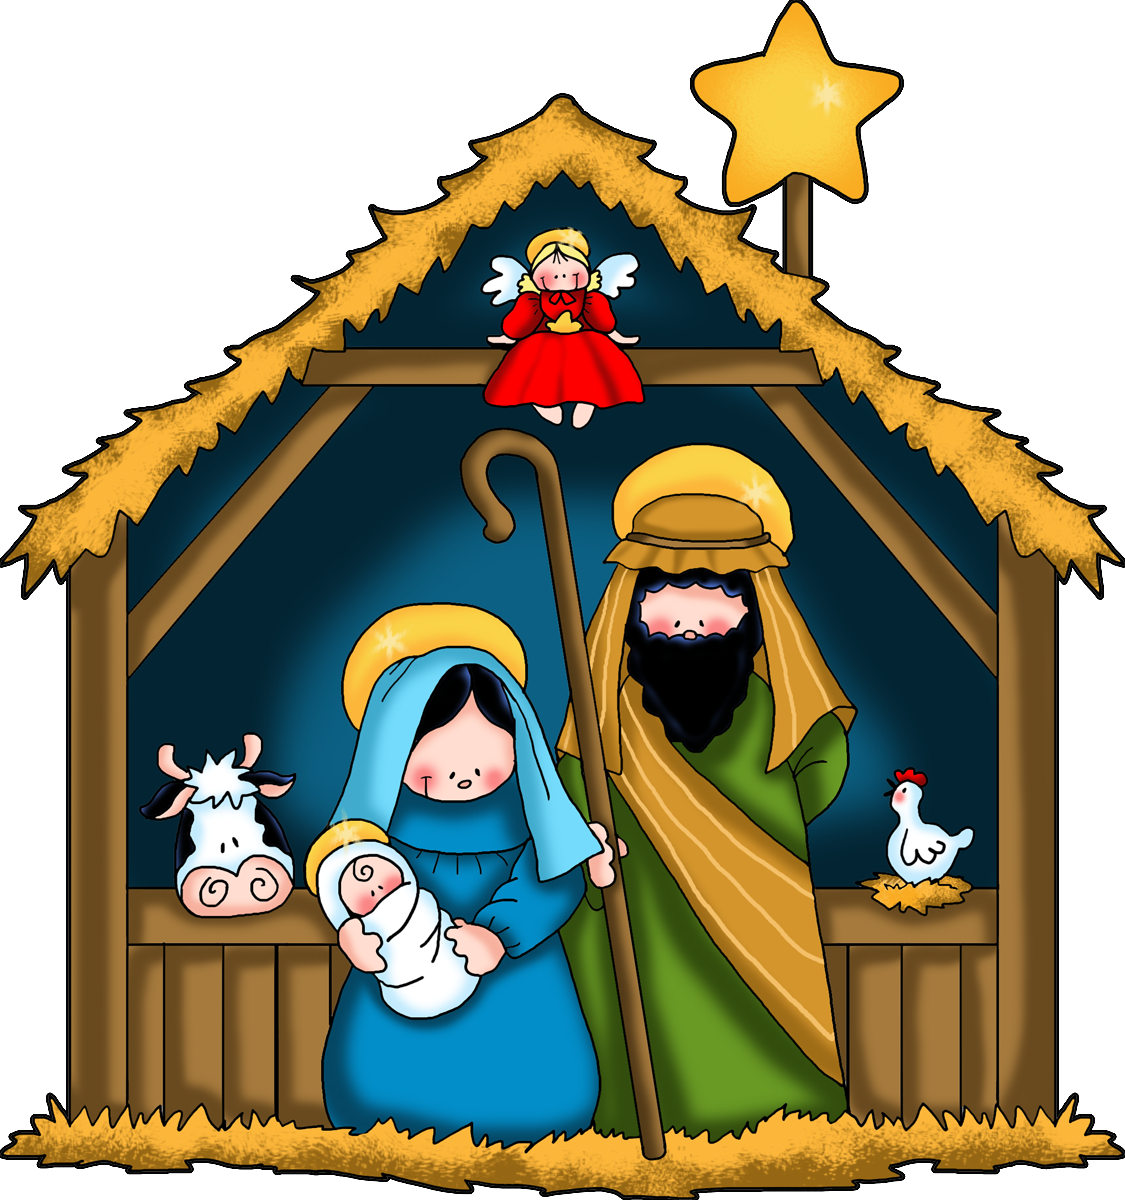 nativity scene images - www.